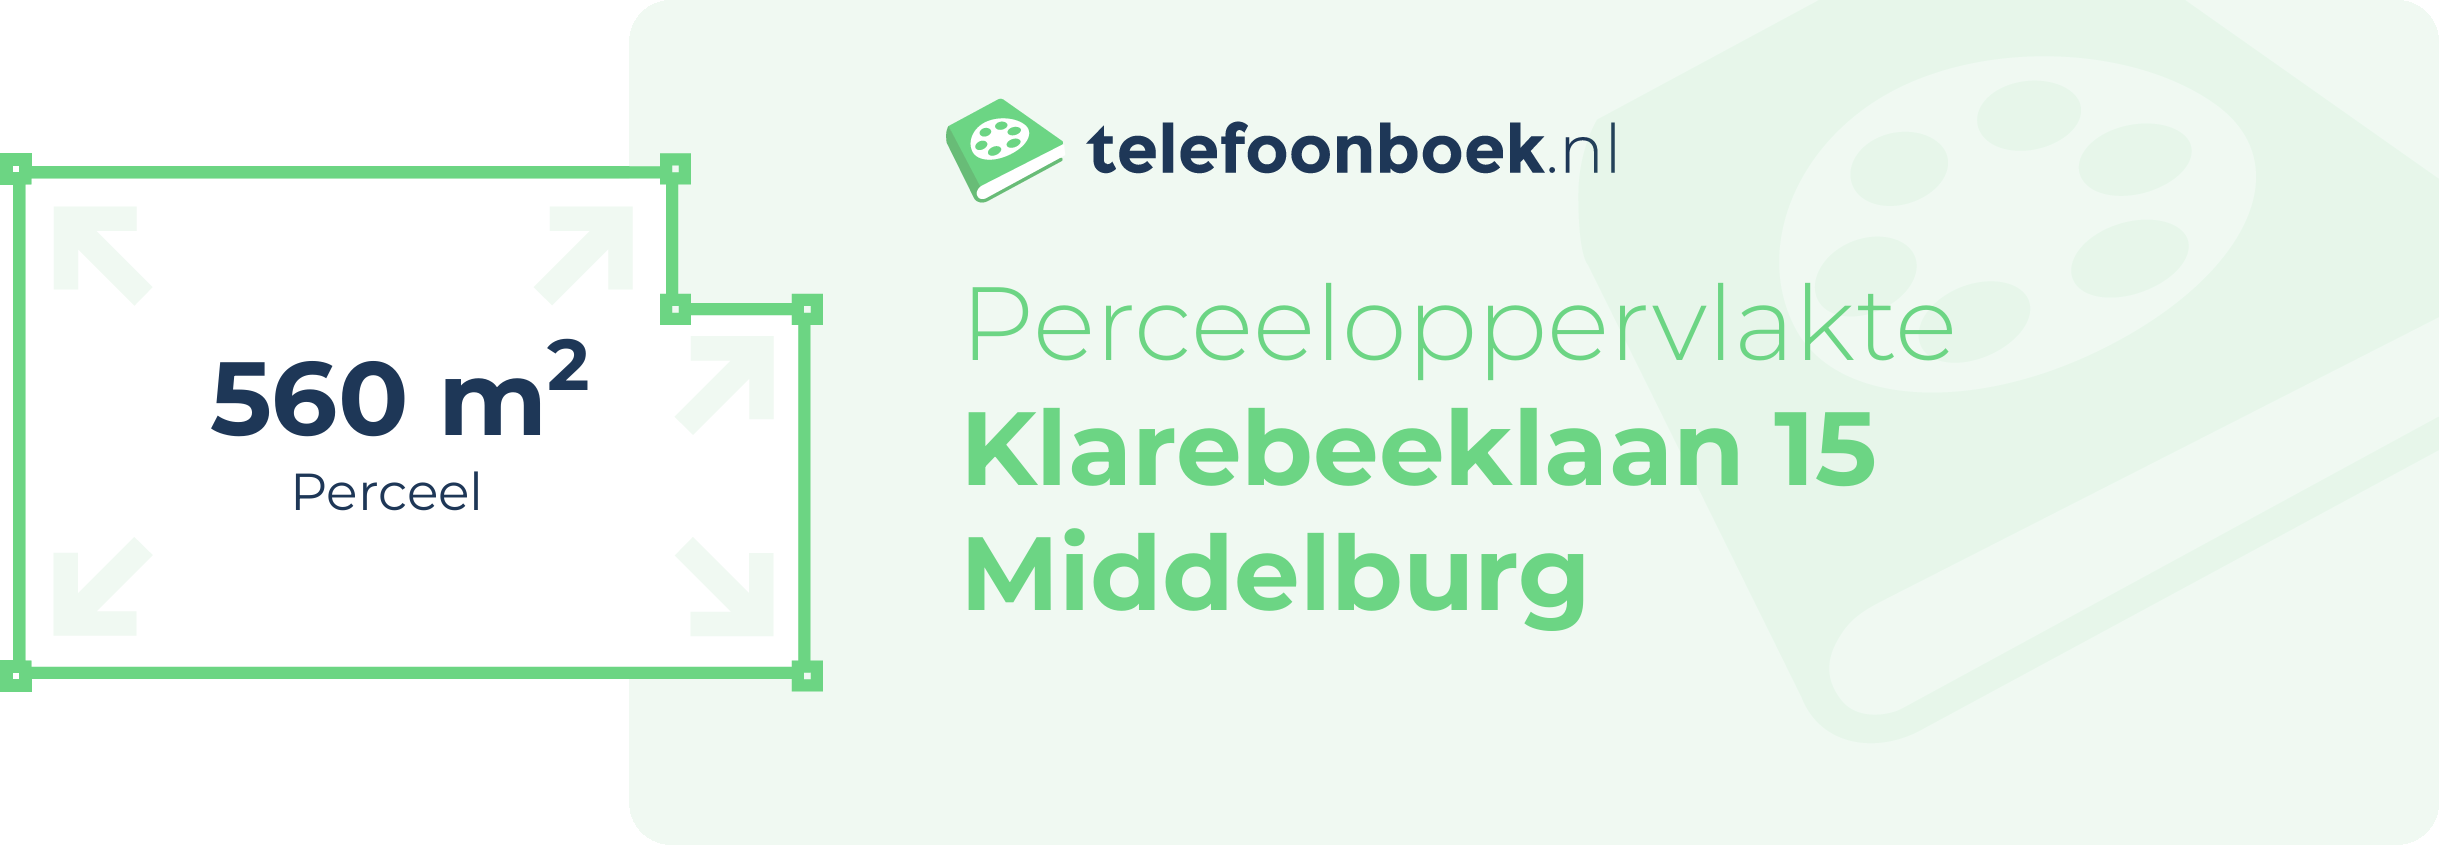 Perceeloppervlakte Klarebeeklaan 15 Middelburg